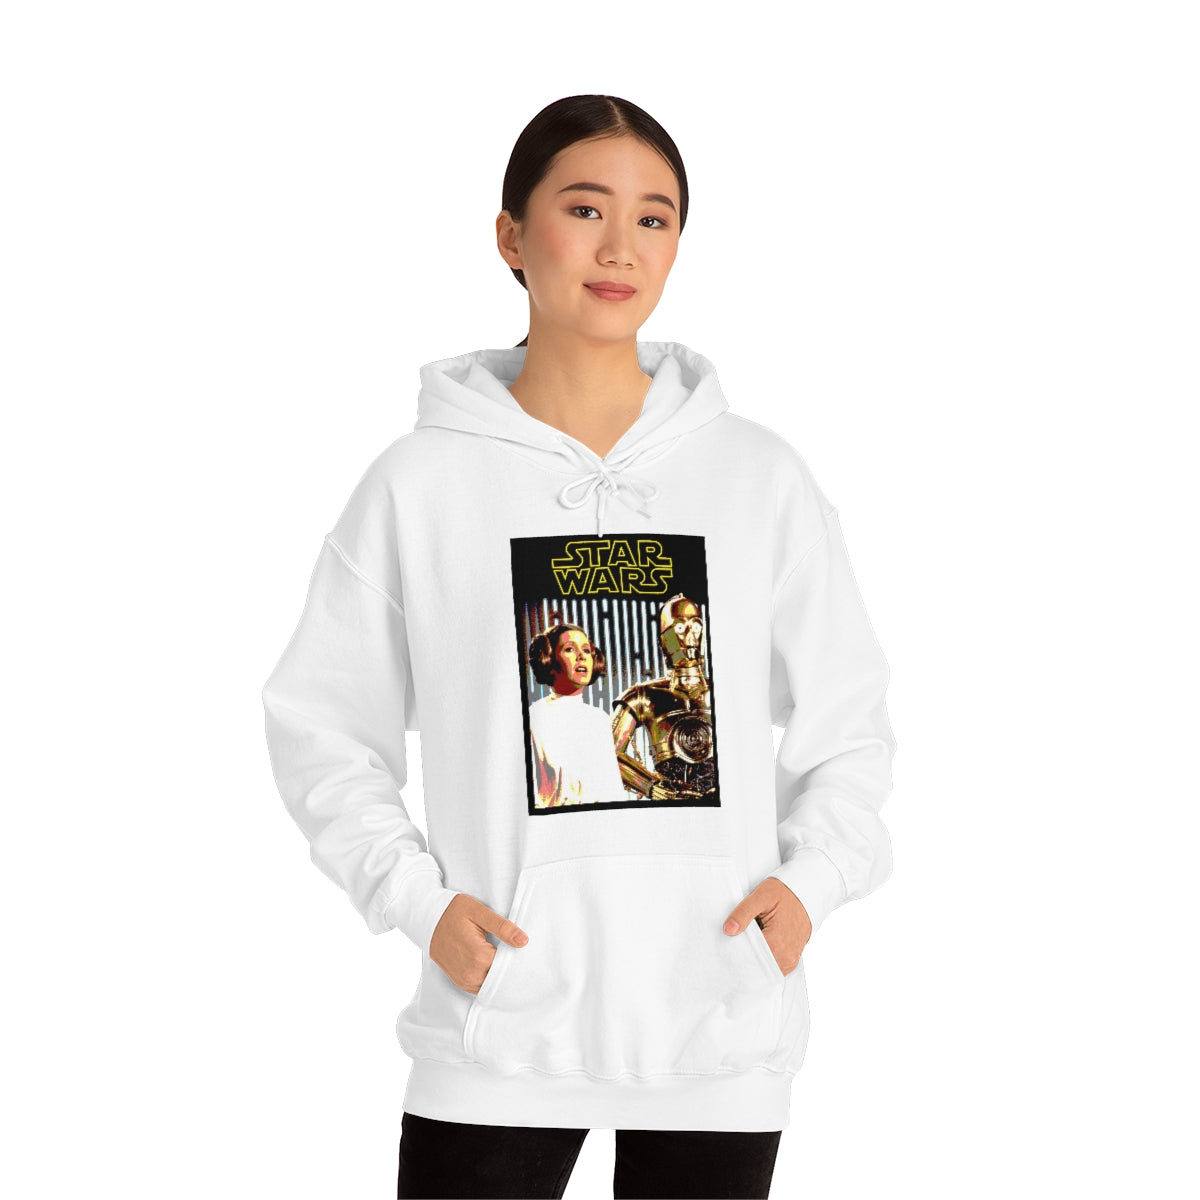 Star Wars Pop Culture Hooded Sweatshirt